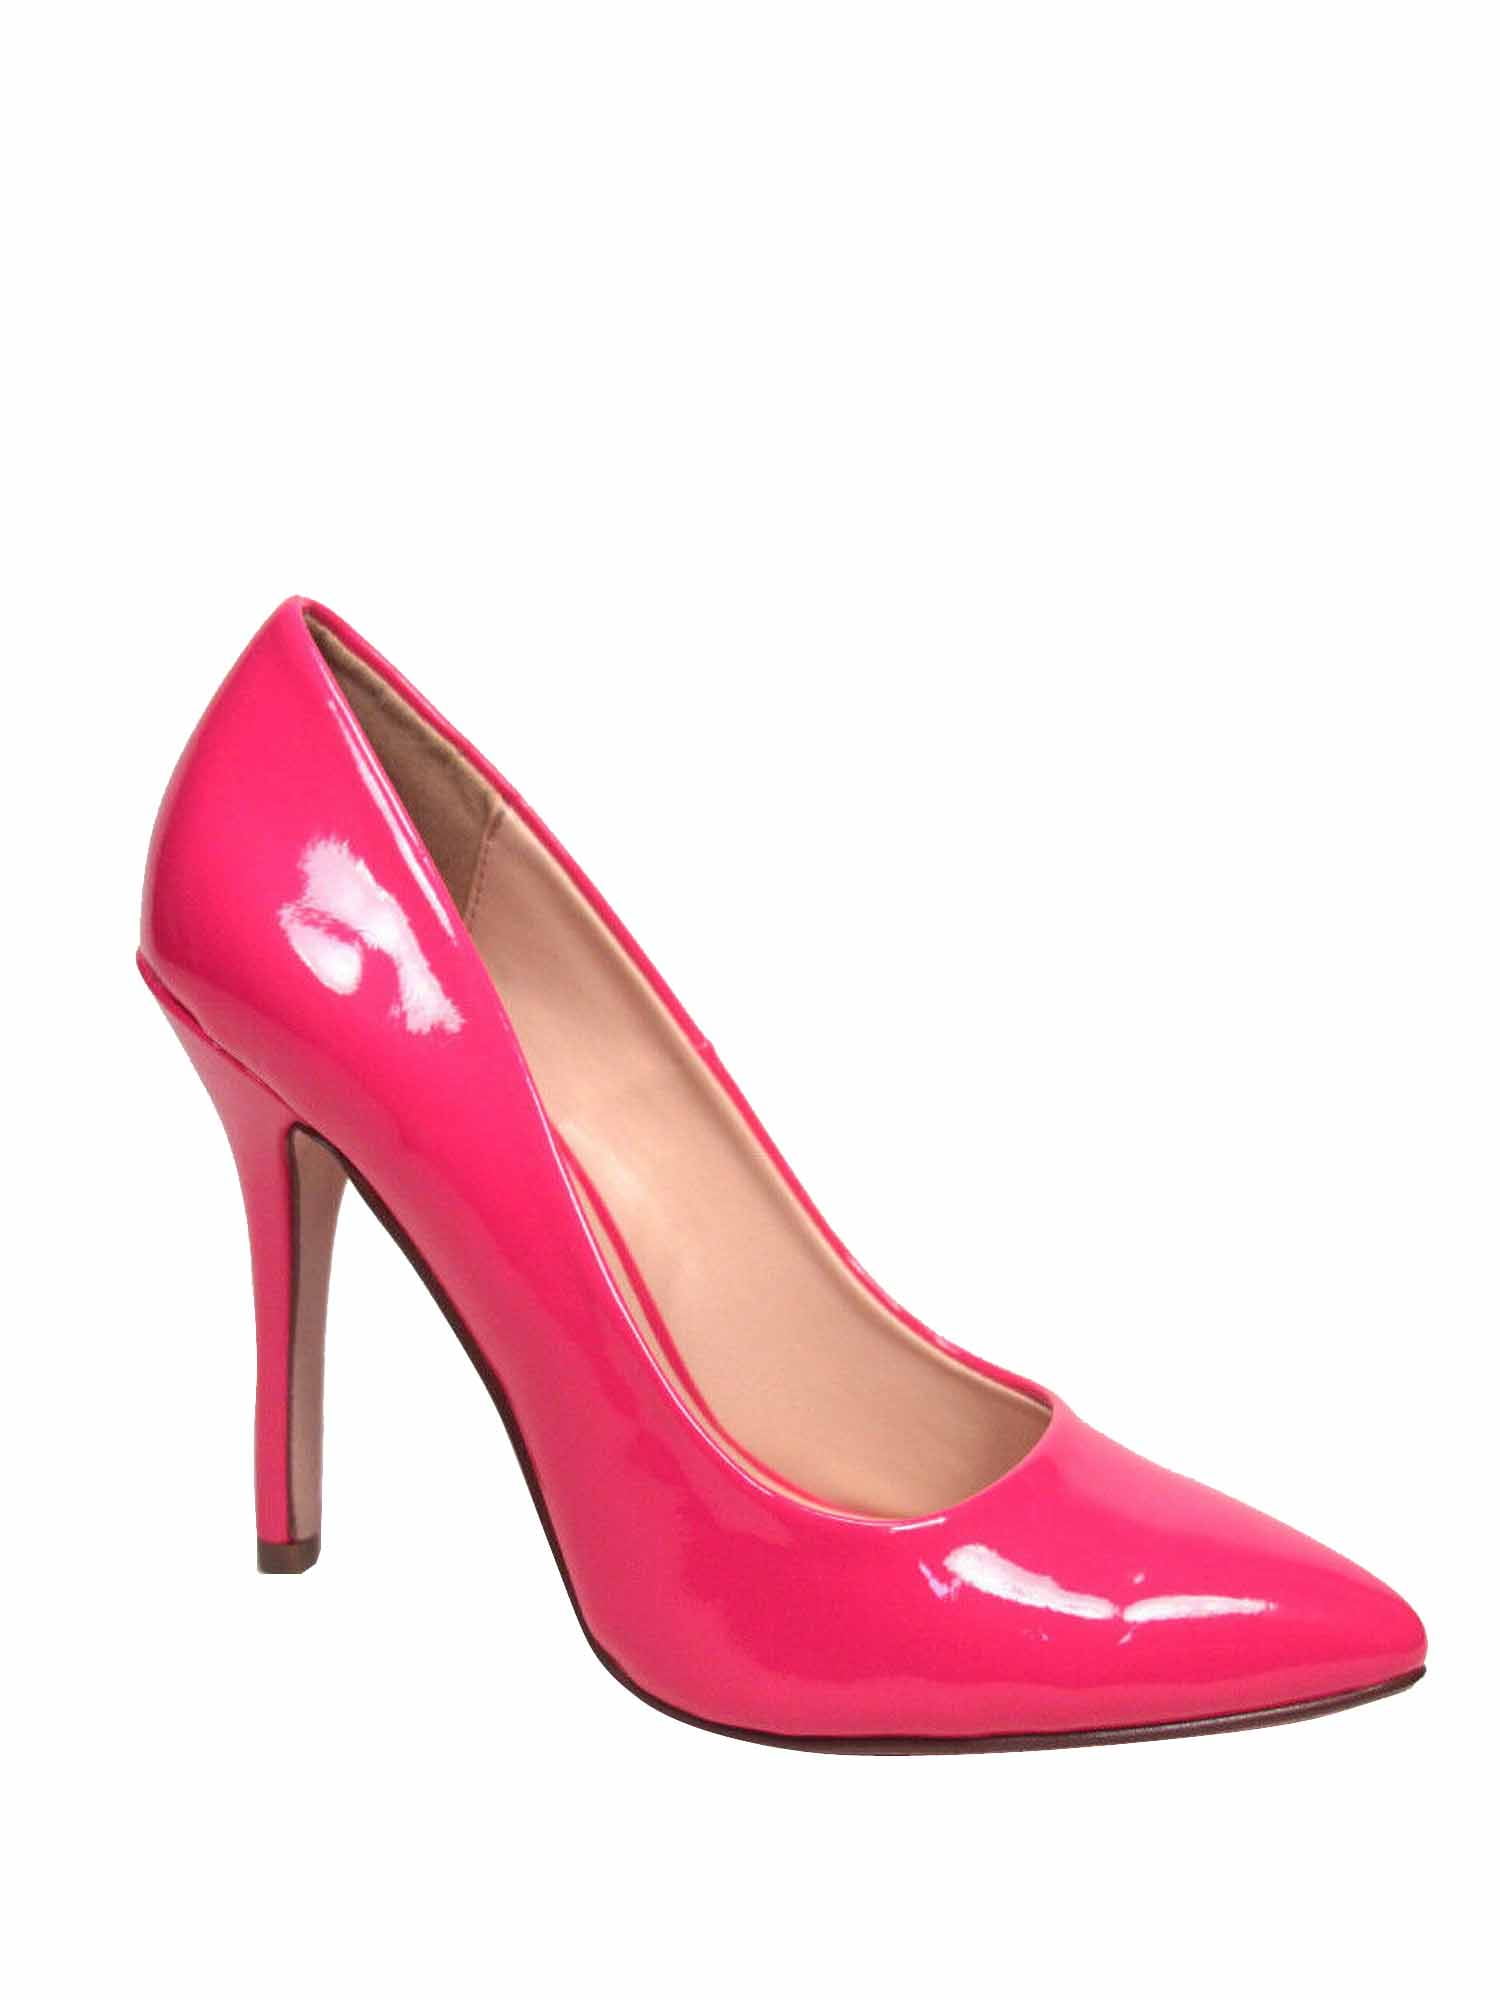 Perphy Women's Rhinestone Ankle Tie Stiletto Heels Sandals Hot Pink 7 :  Target